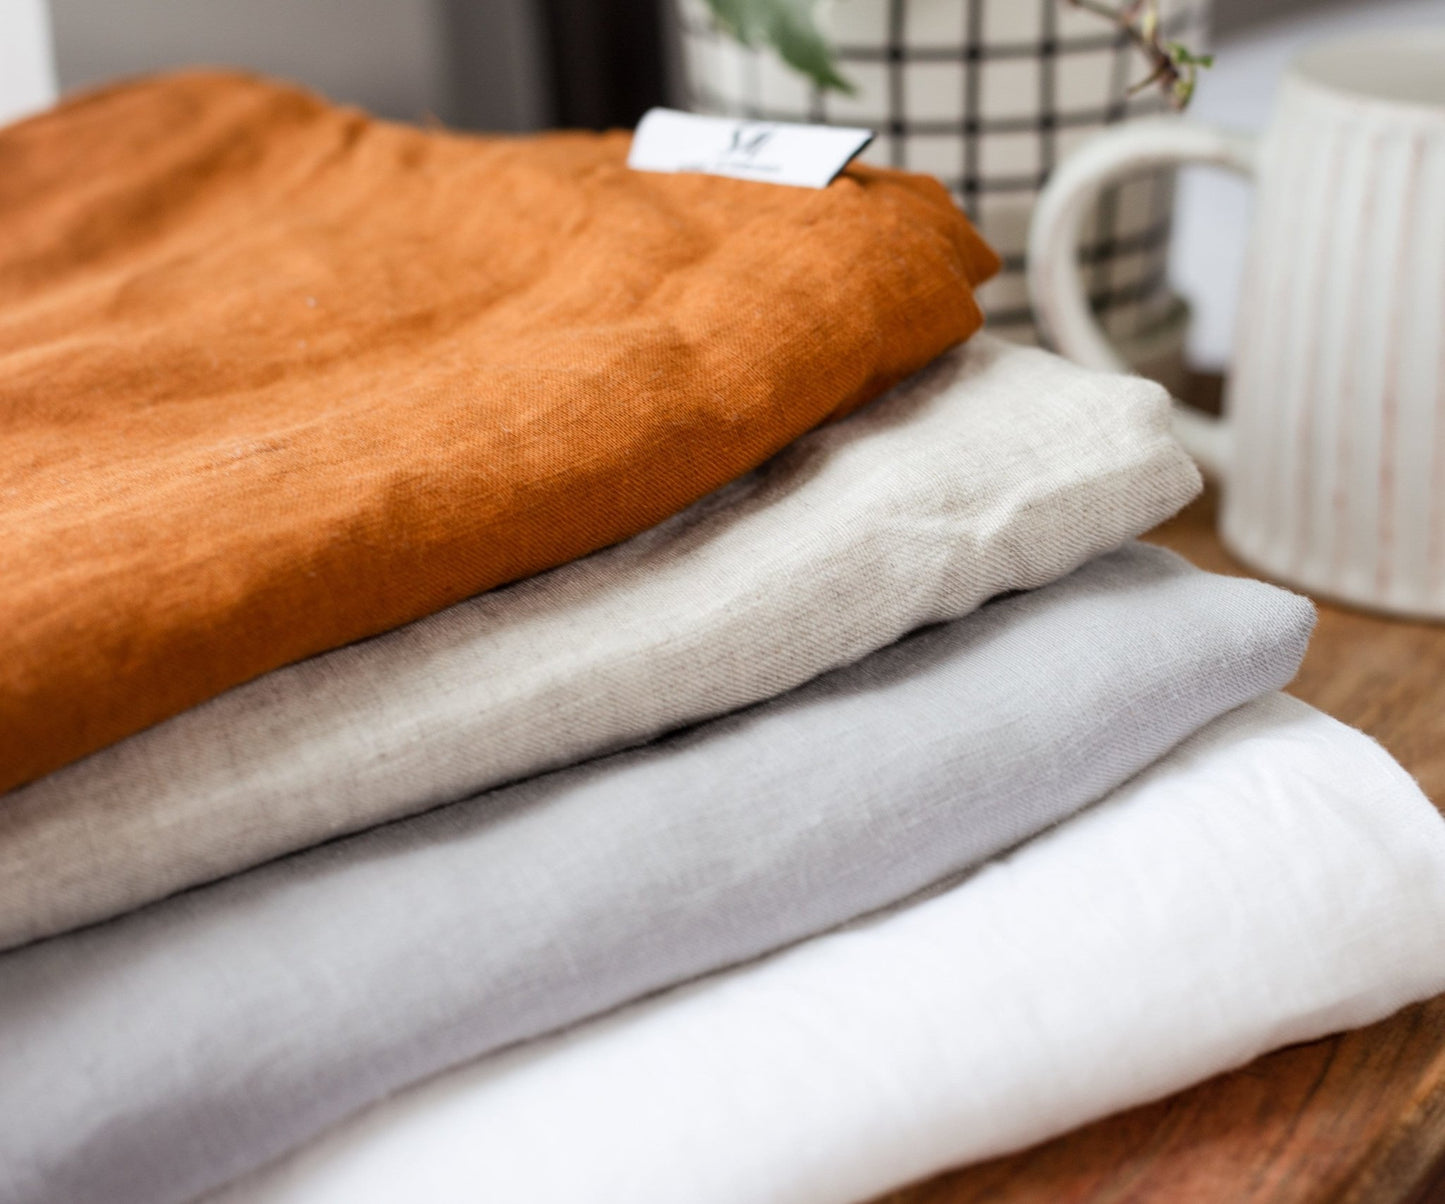 Linen Bedding Duvet in Light Grey Color | Natural King Queen Soft Linen Duvet Cover | Farmhouse Bedding Home Bedroom Decor Linen Duvet Cover